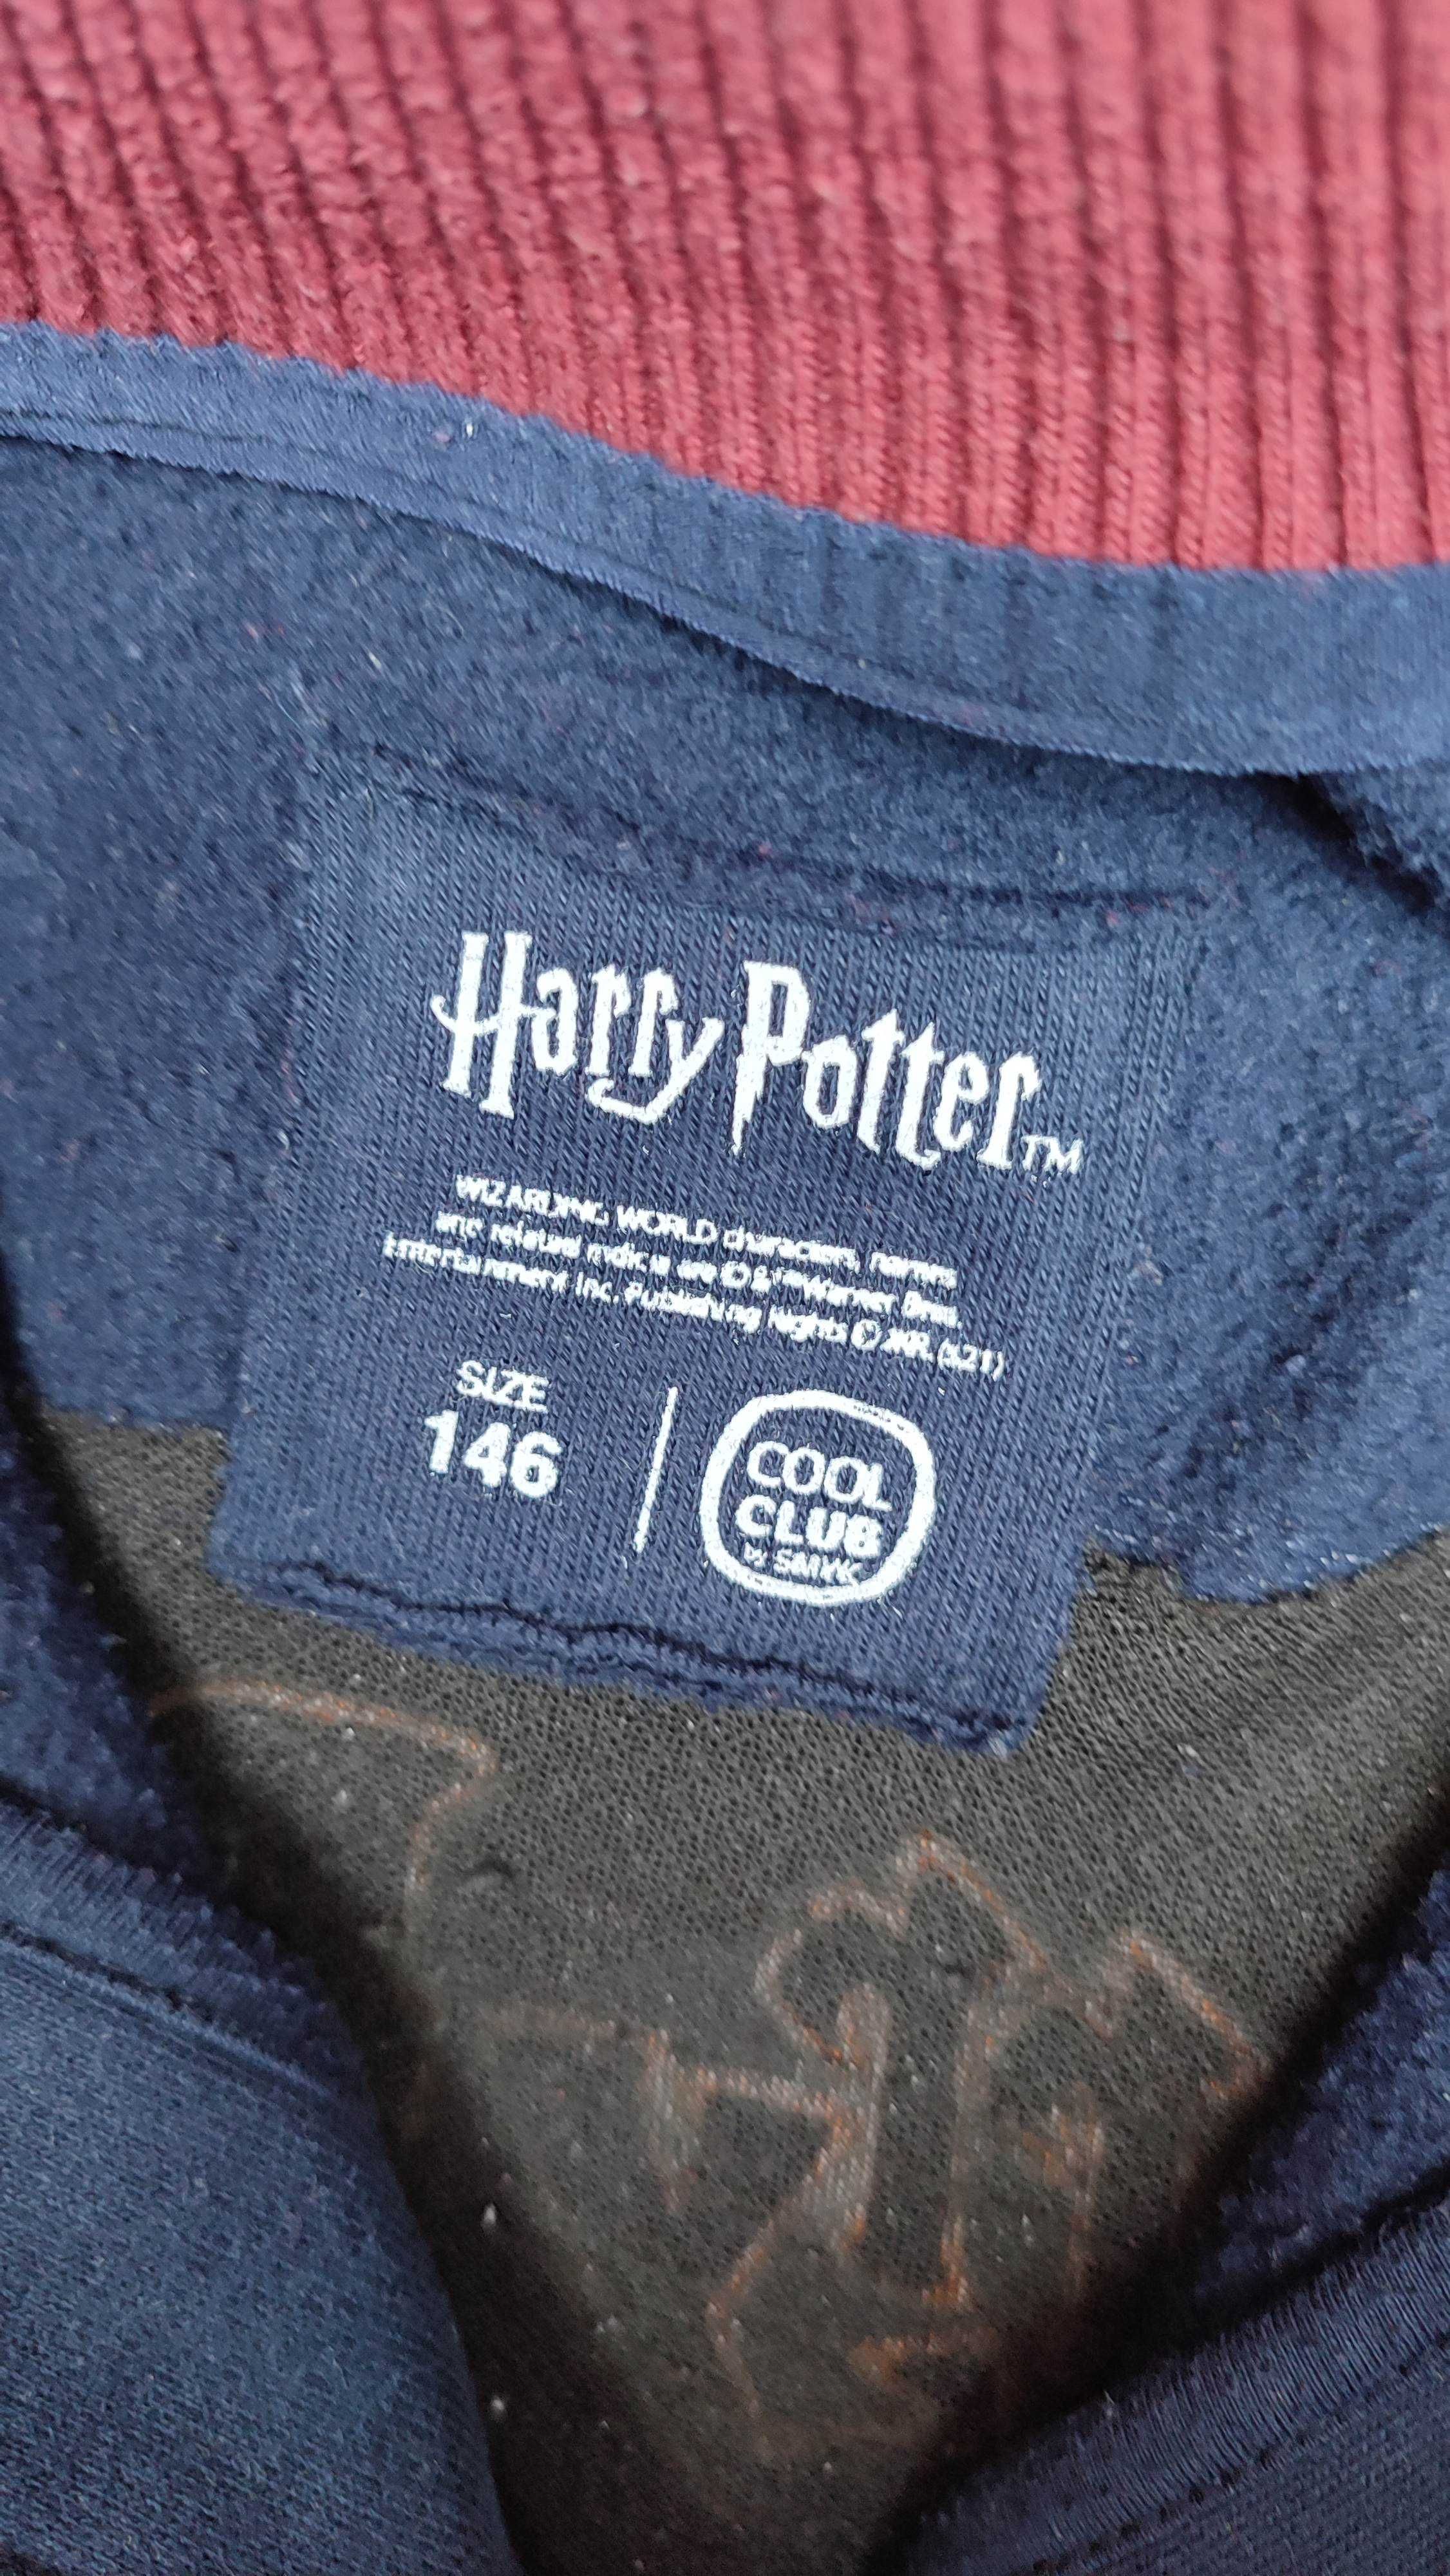 Bluza Cool club, Harry Potter, chłopięca, r. 146